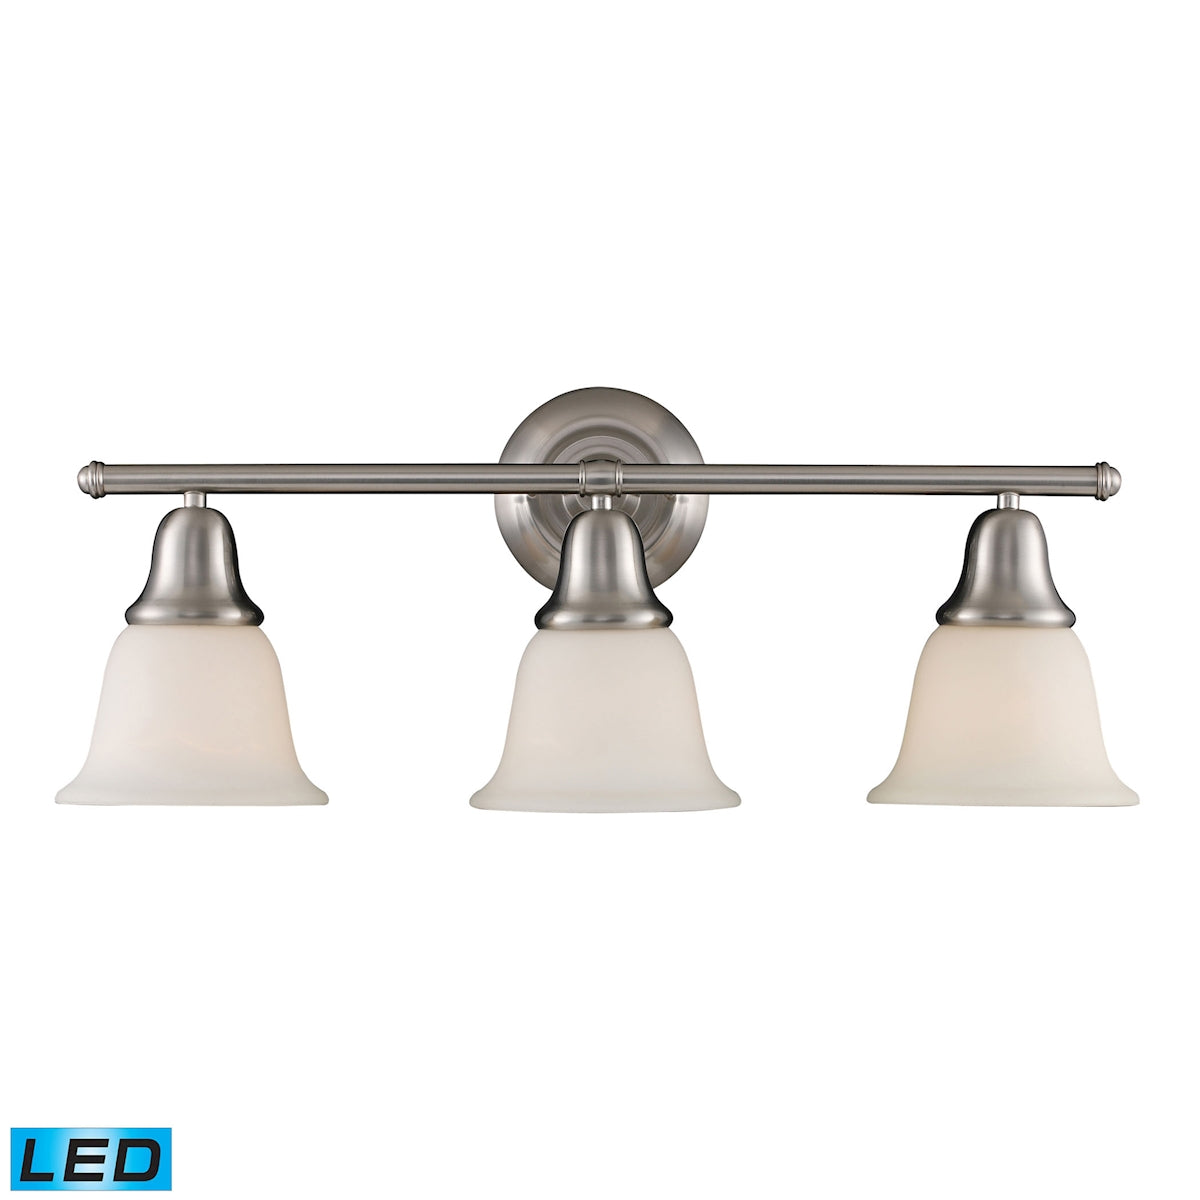 ELK Lighting 67022-3-LED Berwick 3-Light Vanity Lamp in Brushed Nickel with White Glass - Includes LED Bulbs